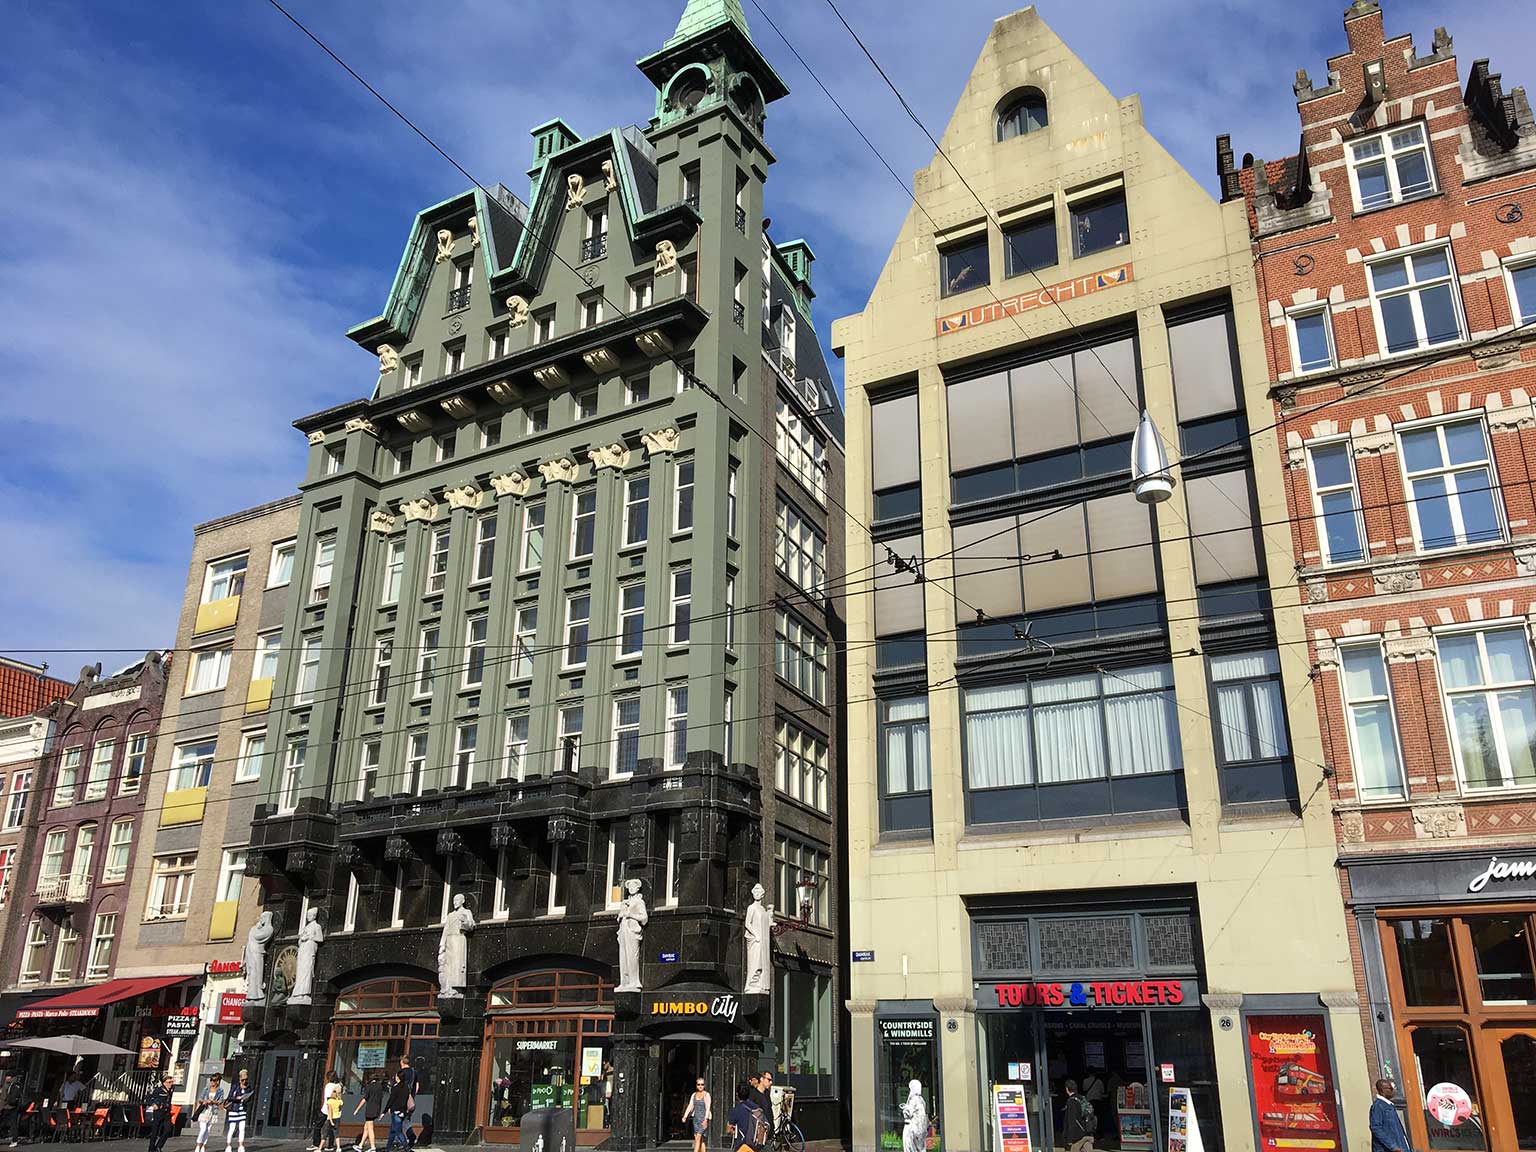 Karnemelksteeg (Buttermilk Alley), Amsterdam, between the two Utrecht buildings on Damrak